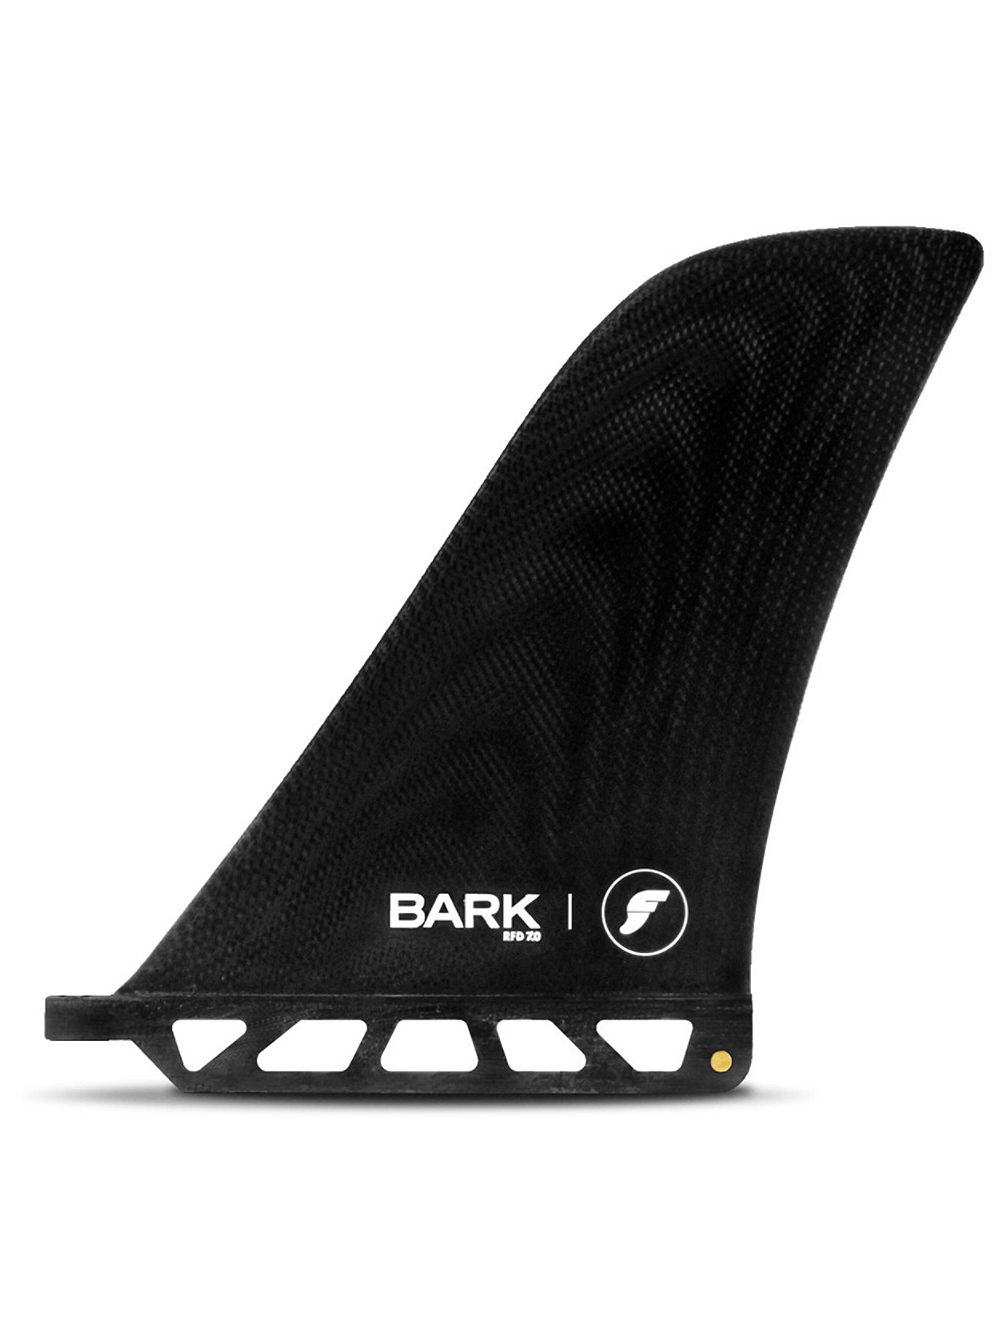 Sup RFD Bark Prone 7.0 Us Quilha de Surf